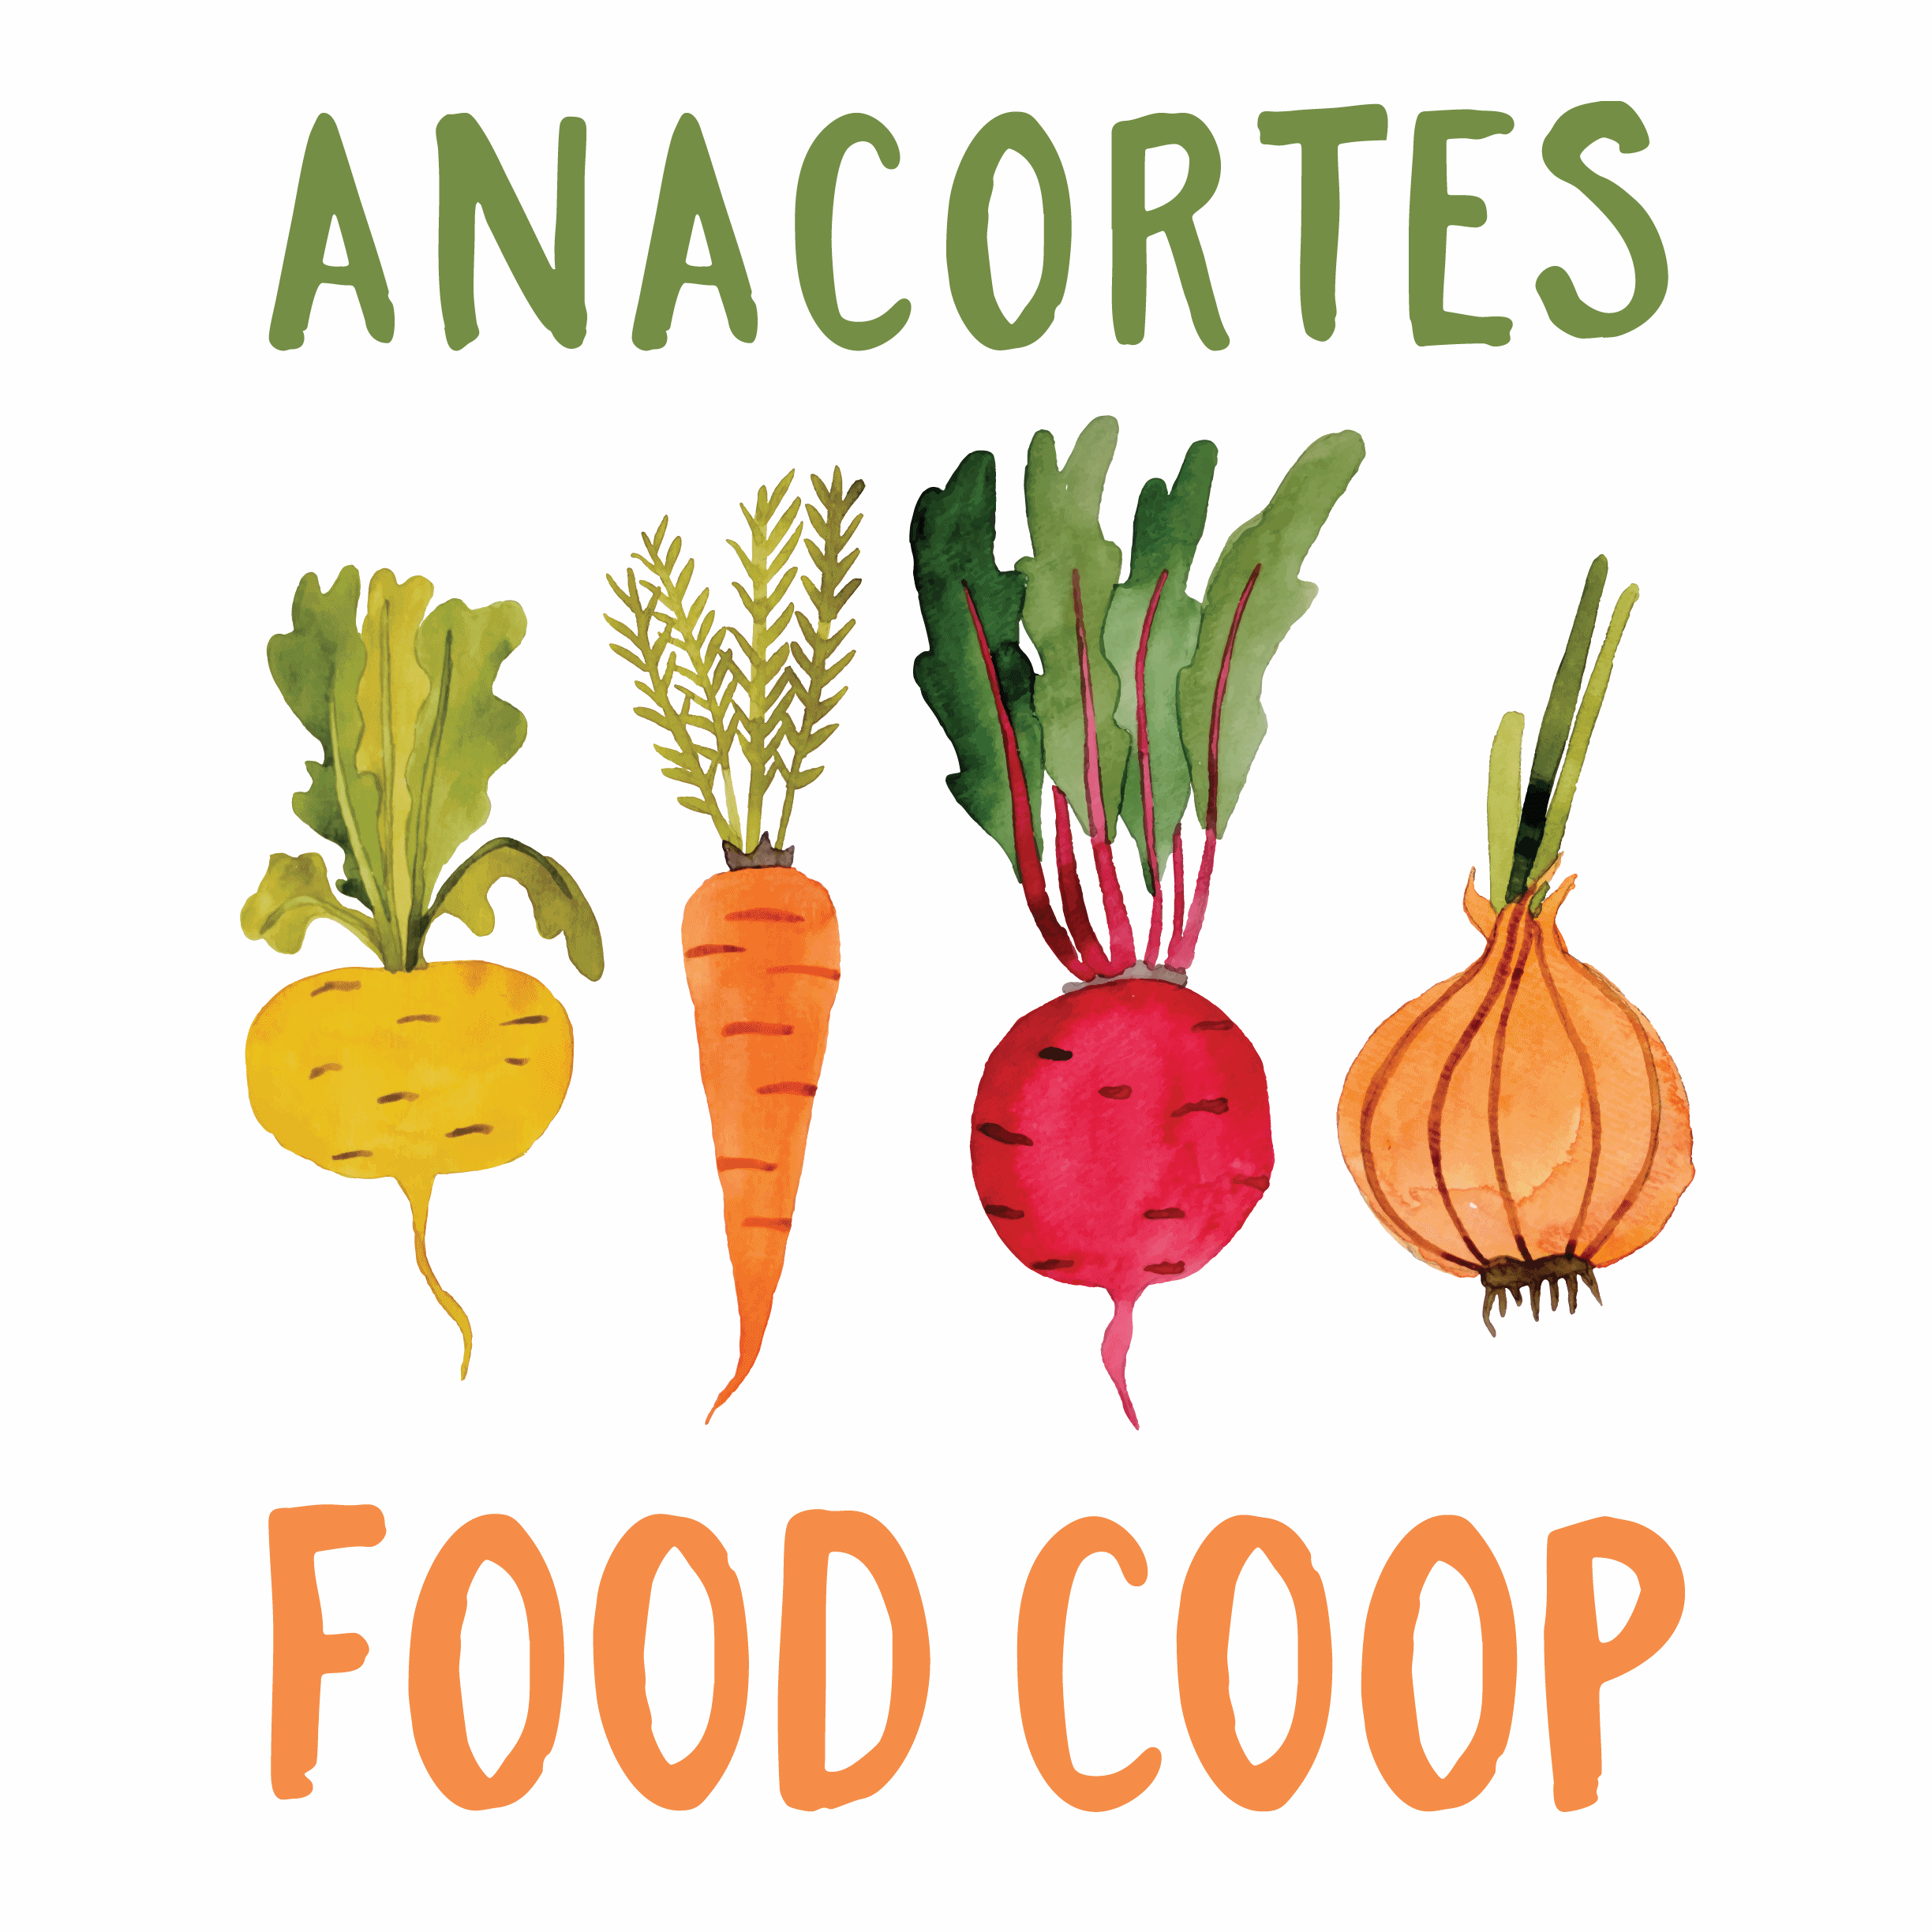 Anacortes Food Co-op logo